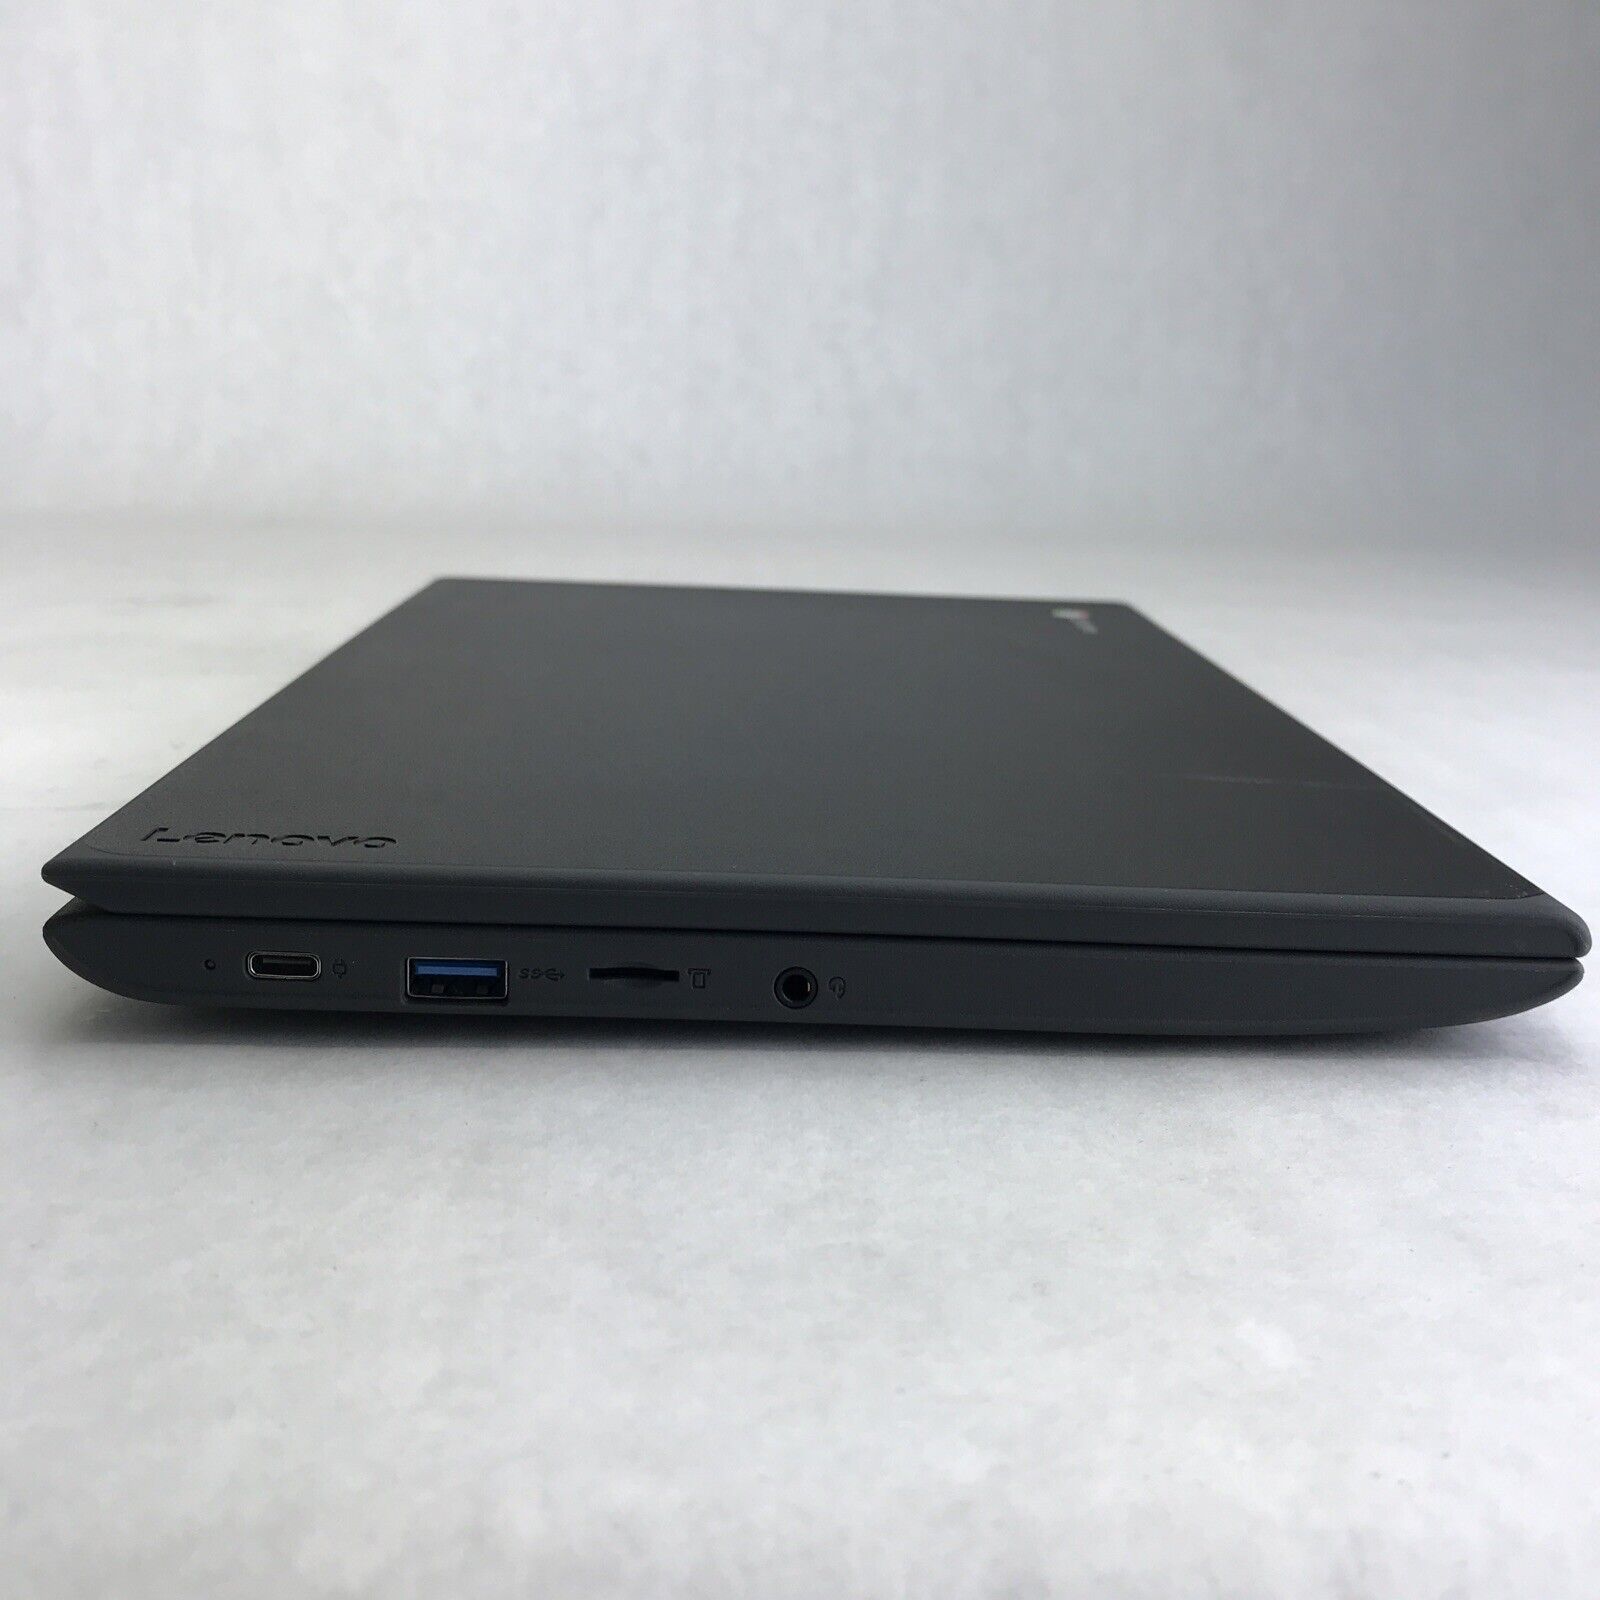 Lenovo Chromebook 100e 81ER 11.6" Intel Celeron N3350 1.1GHz 4GB RAM 16GB SSD